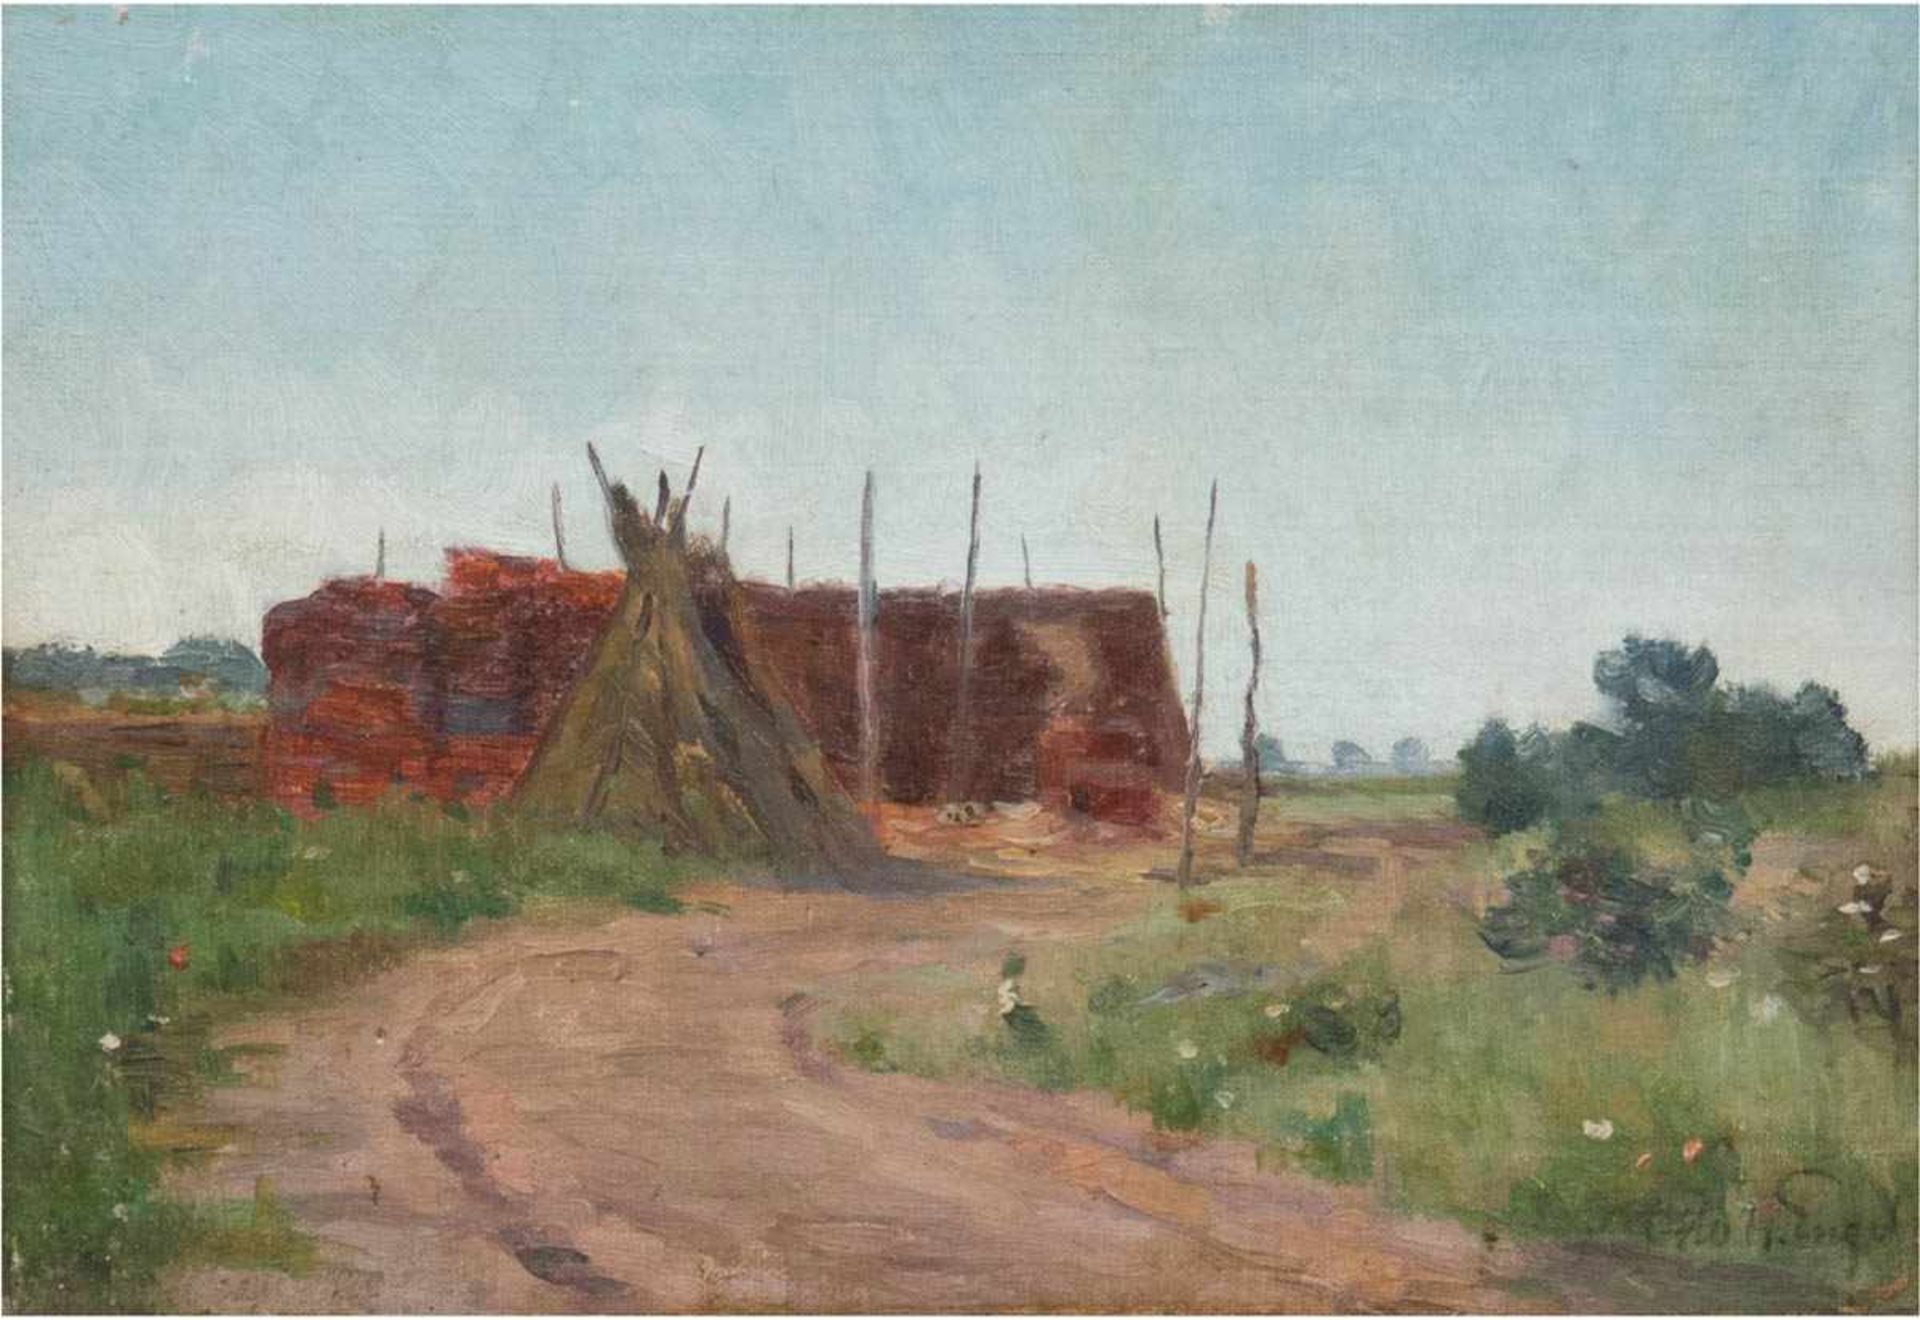 Engel, Otto Heinrich (1866 Erbach-1945 Glücksburg) "Landschaft" Öl/Lw/Holz, sign. u.r., 23x32 cm,